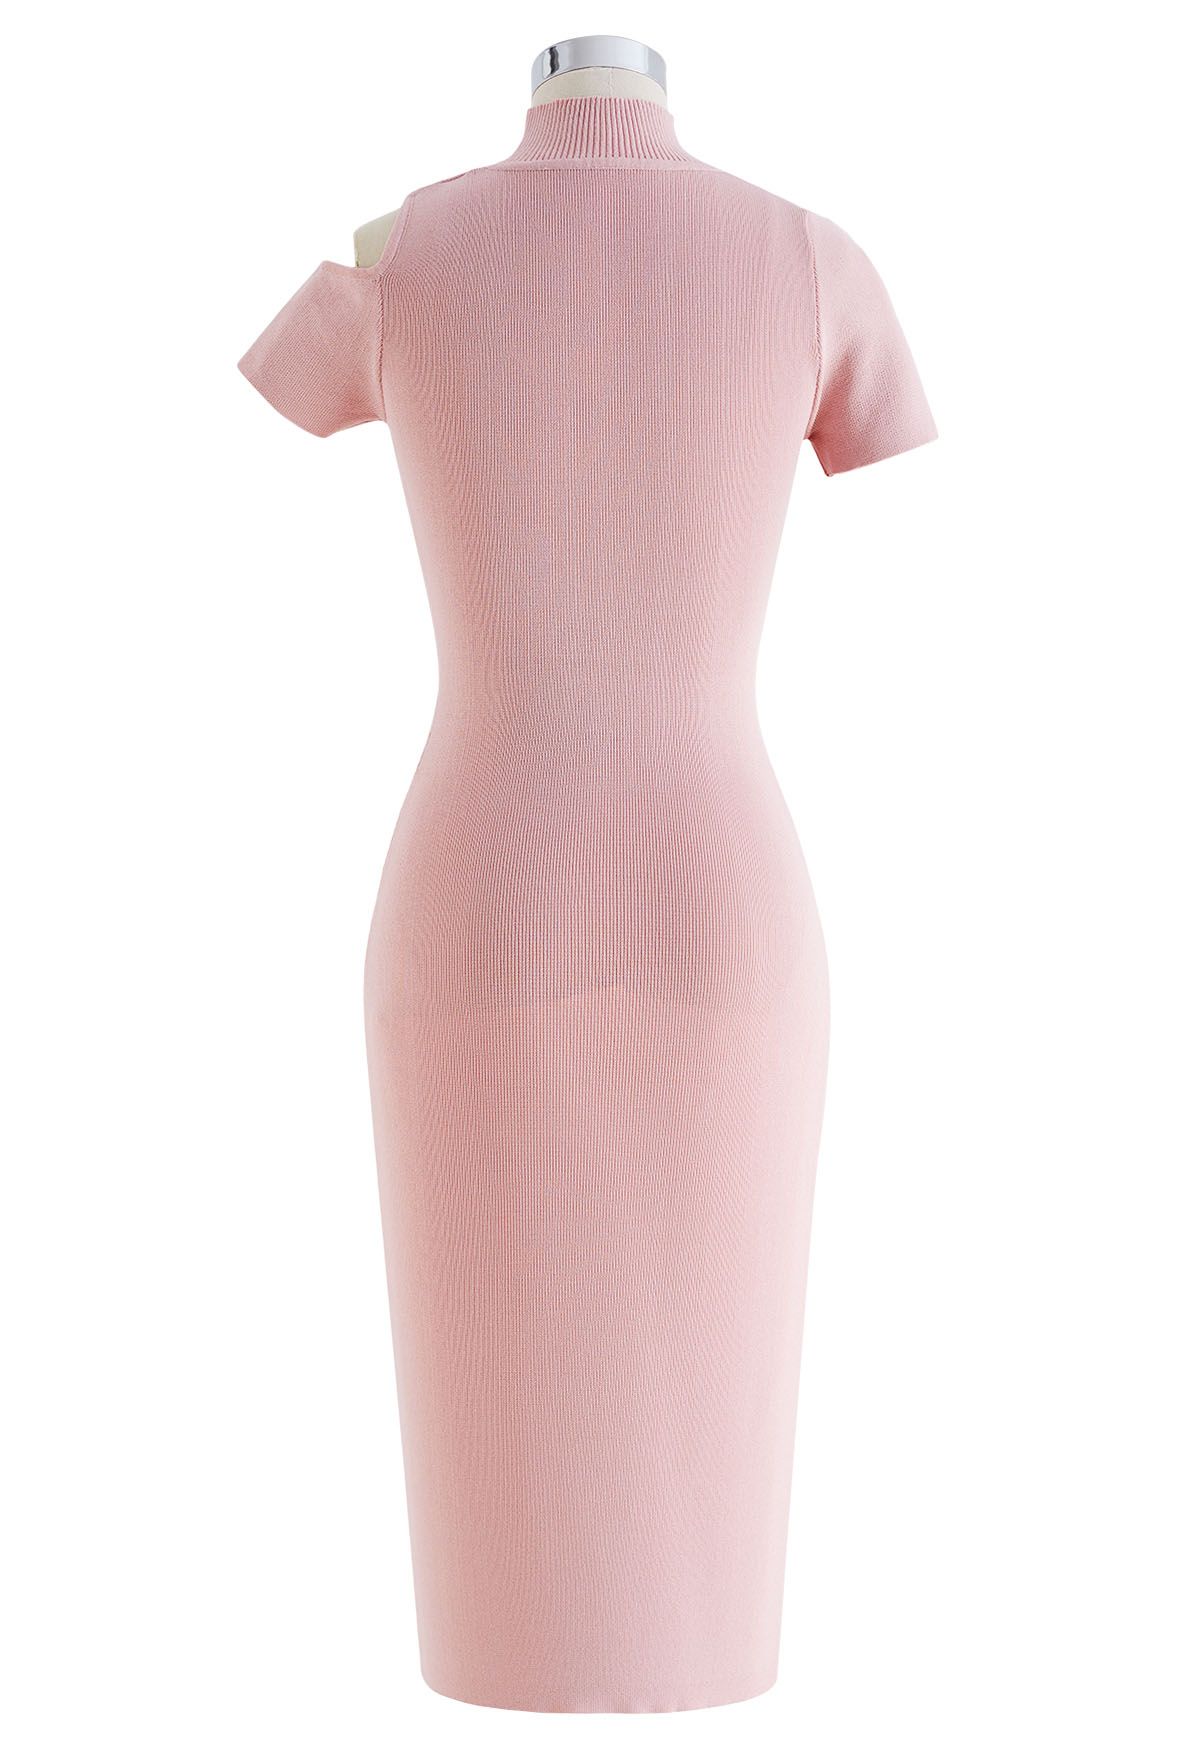 Cutout Neckline Bodycon Knit Dress in Pink